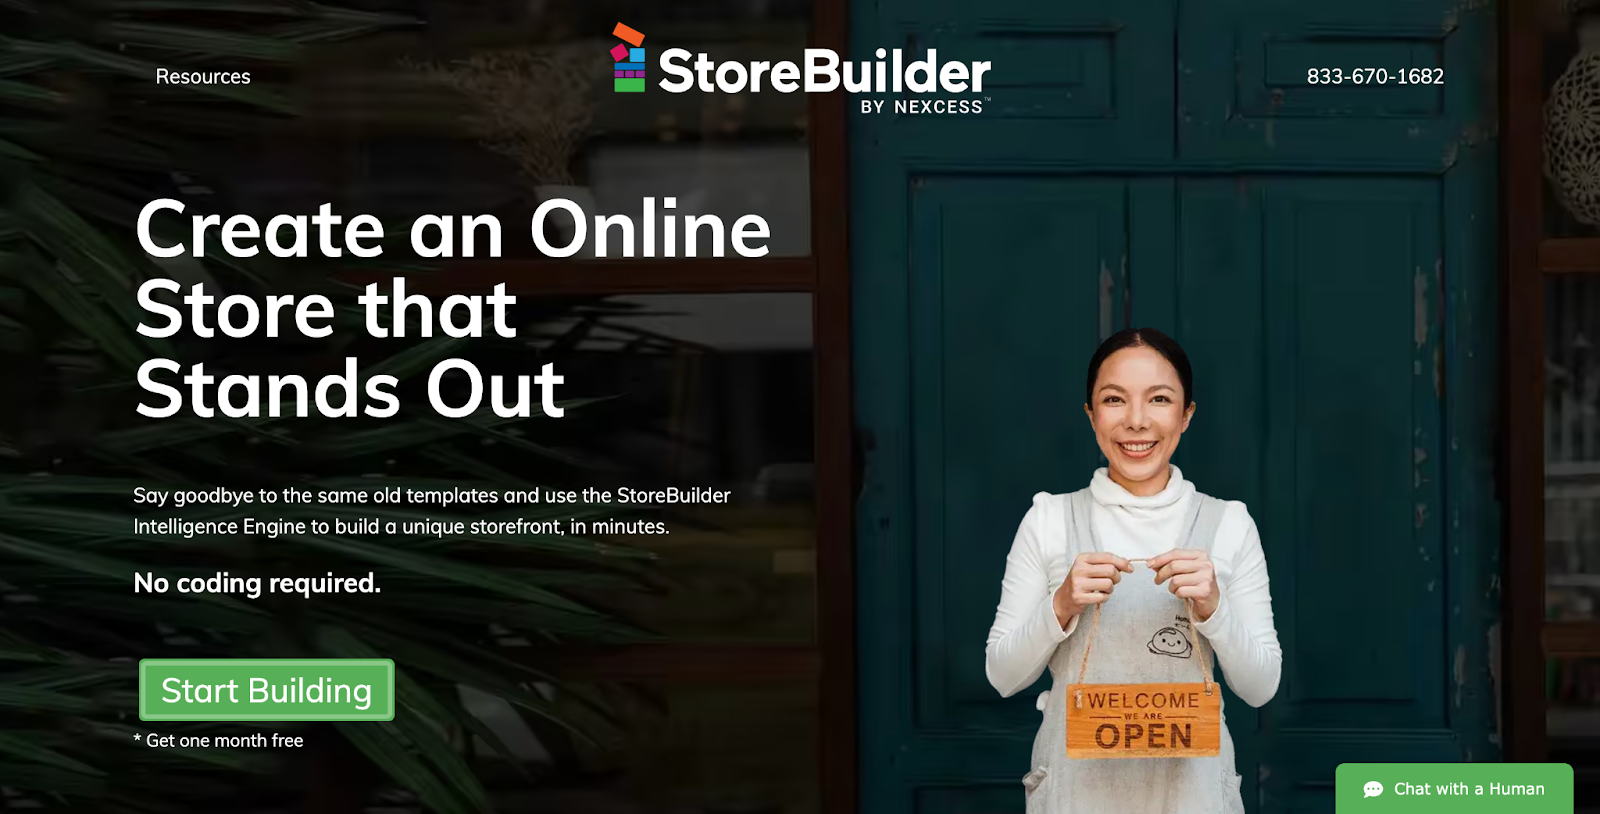 Start your top ecommerce site using Nexcess’ StoreBuilder.